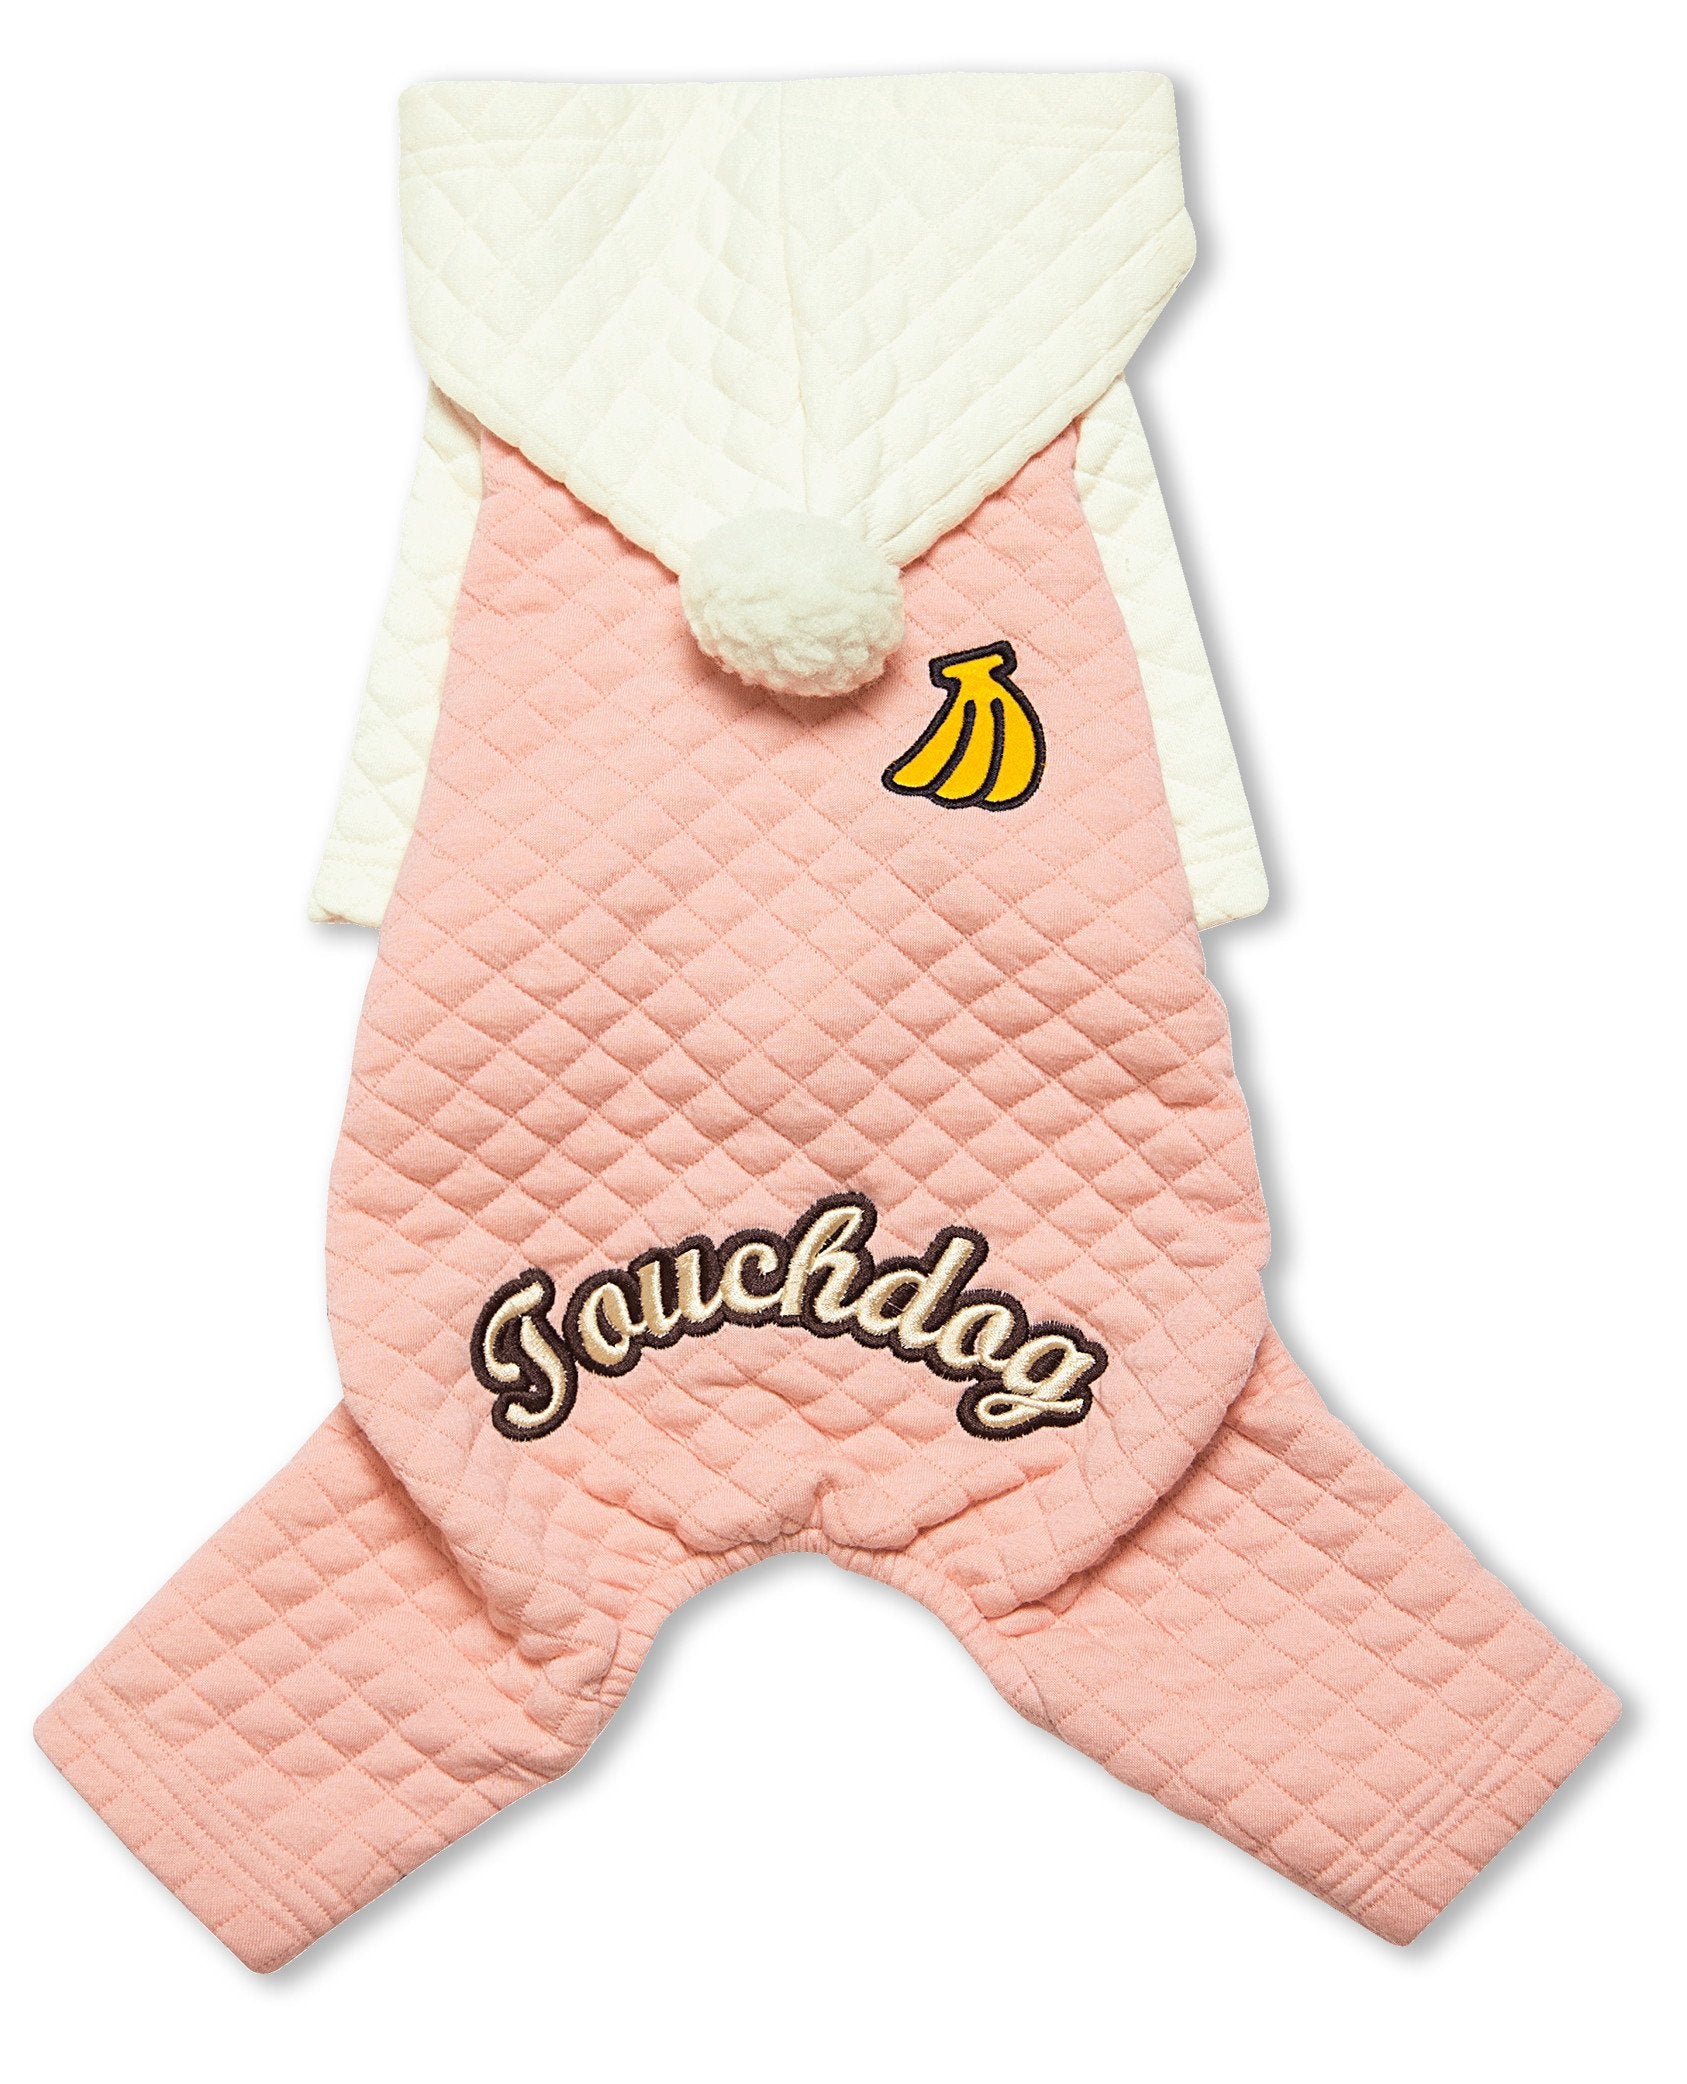 Touchdog Fashion Designer Dog Hooded Sweater - Pink/White - X-Small